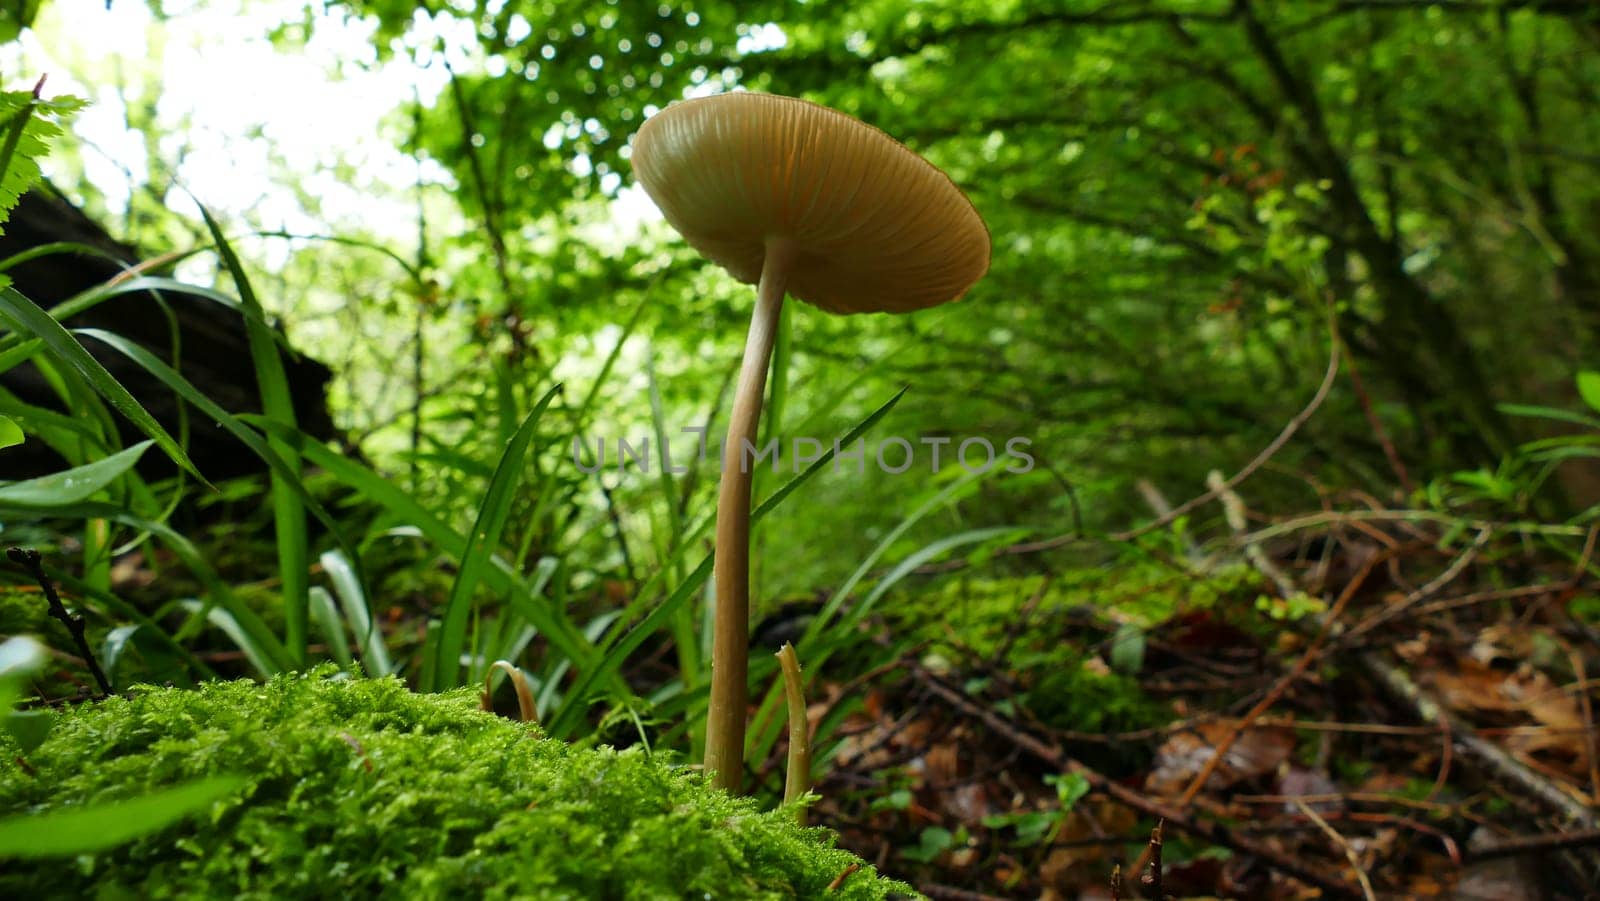 Mushrooms among the forest vegetation by XabiDonostia